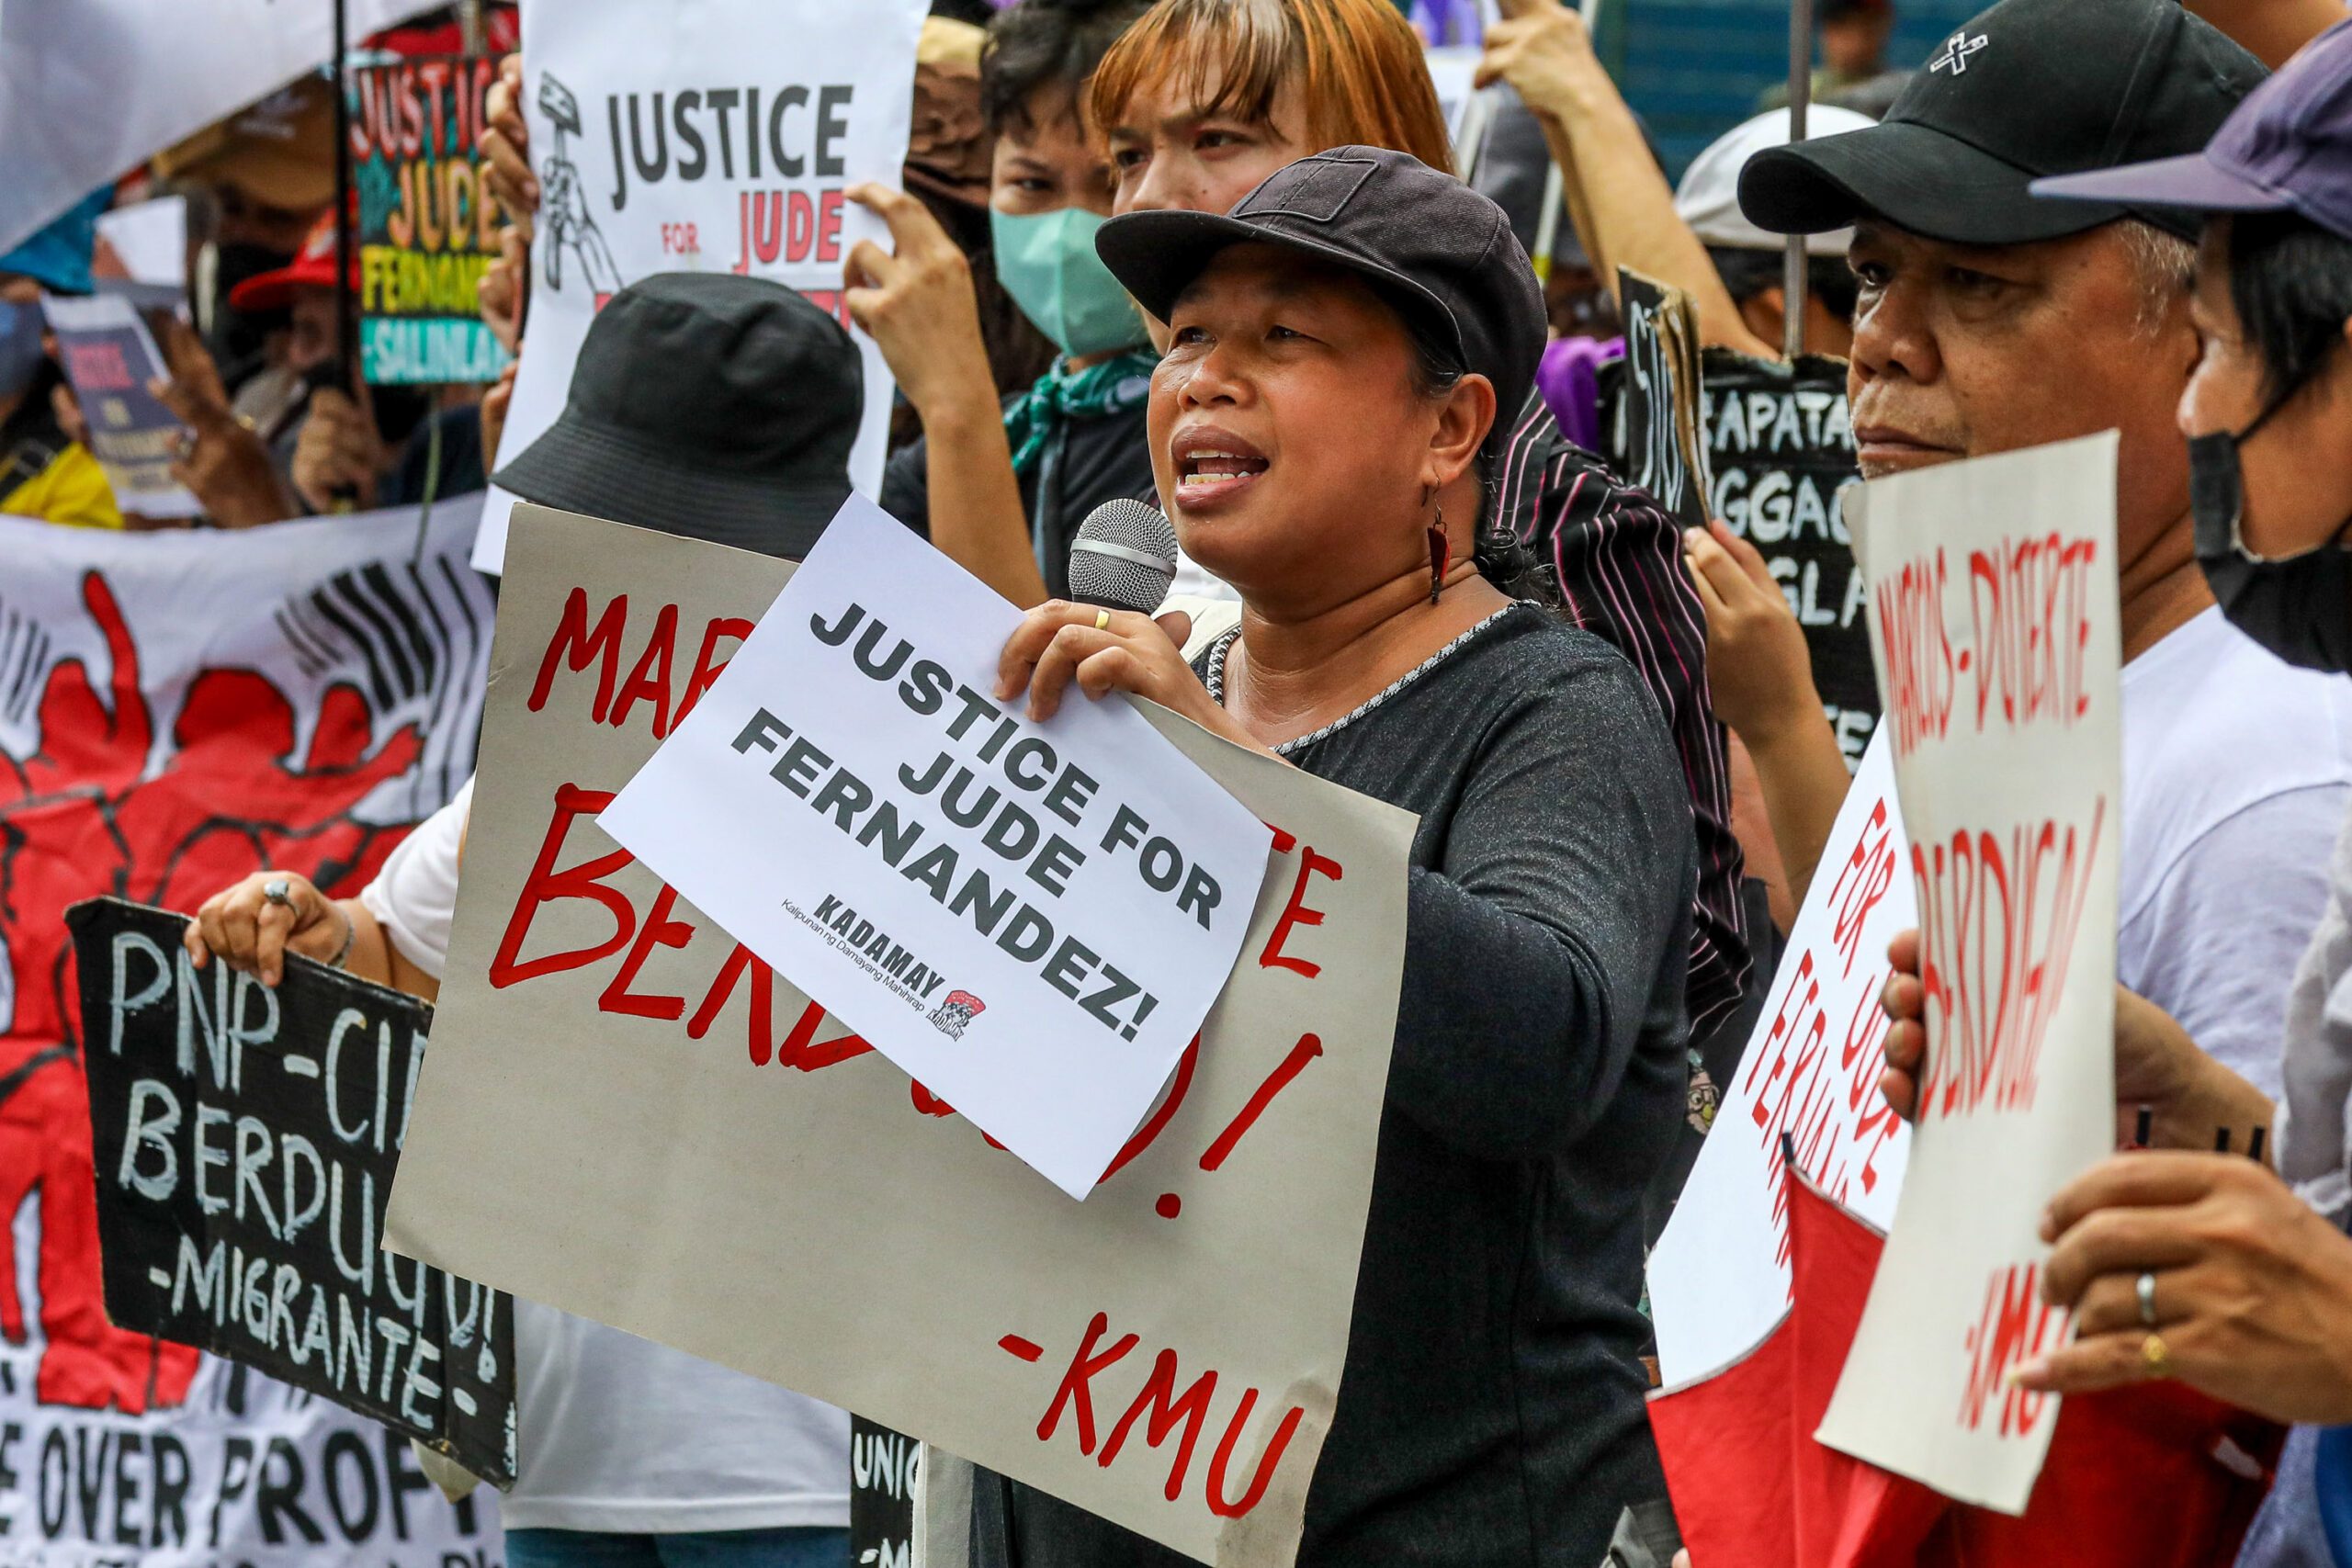 KMU demands justice for slain labor leader in Binangonan, Rizal